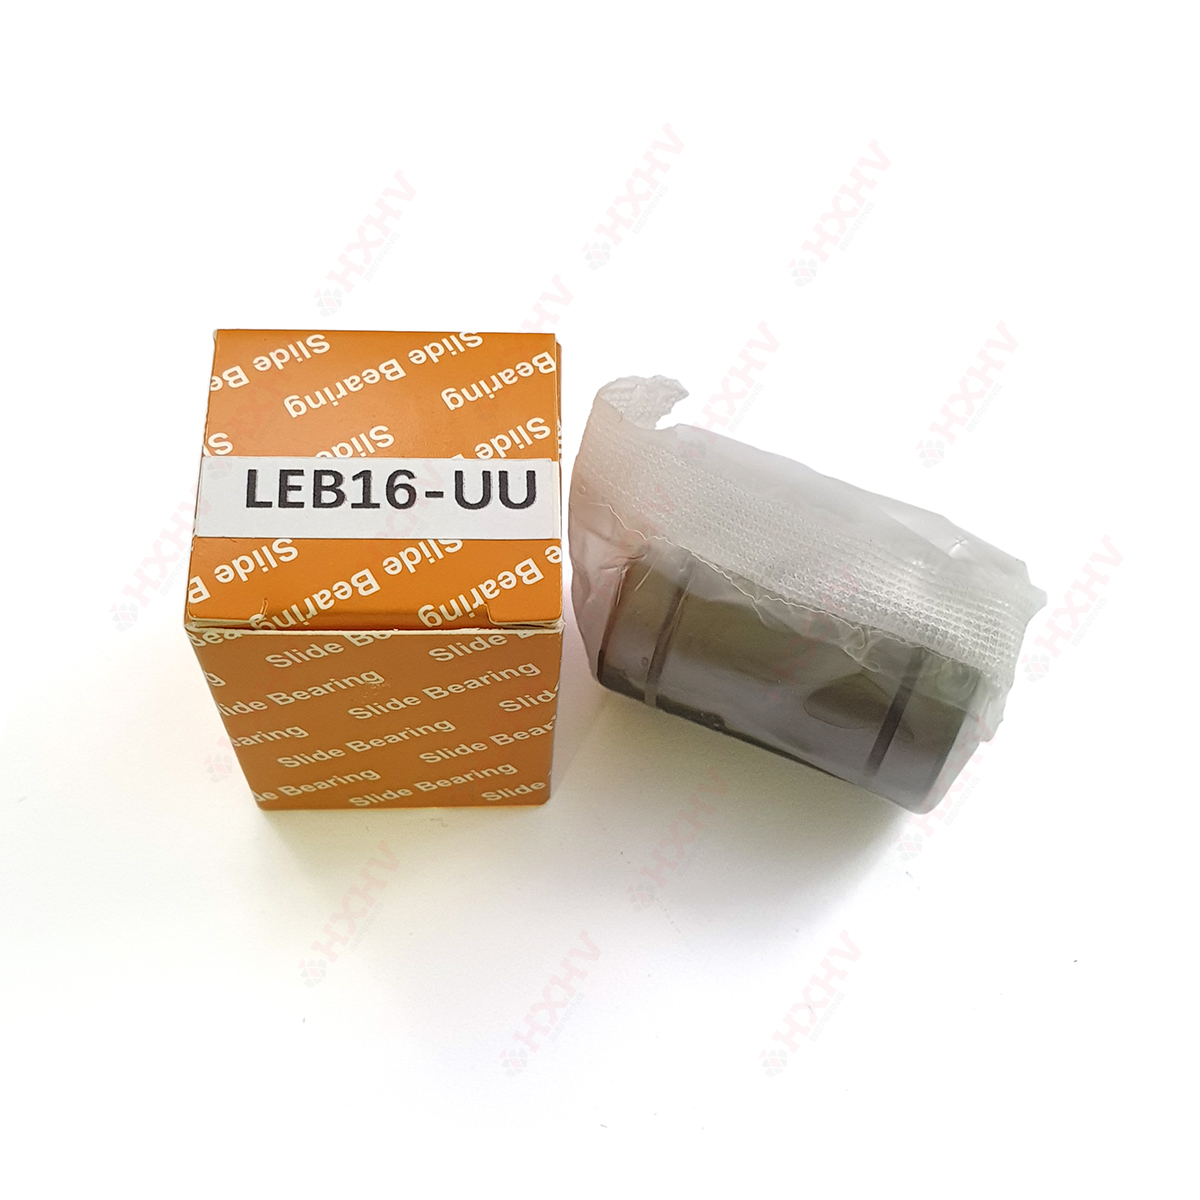 LEB16-UU 16x26x36 mm HXHV linear bushing bearing Featured Image